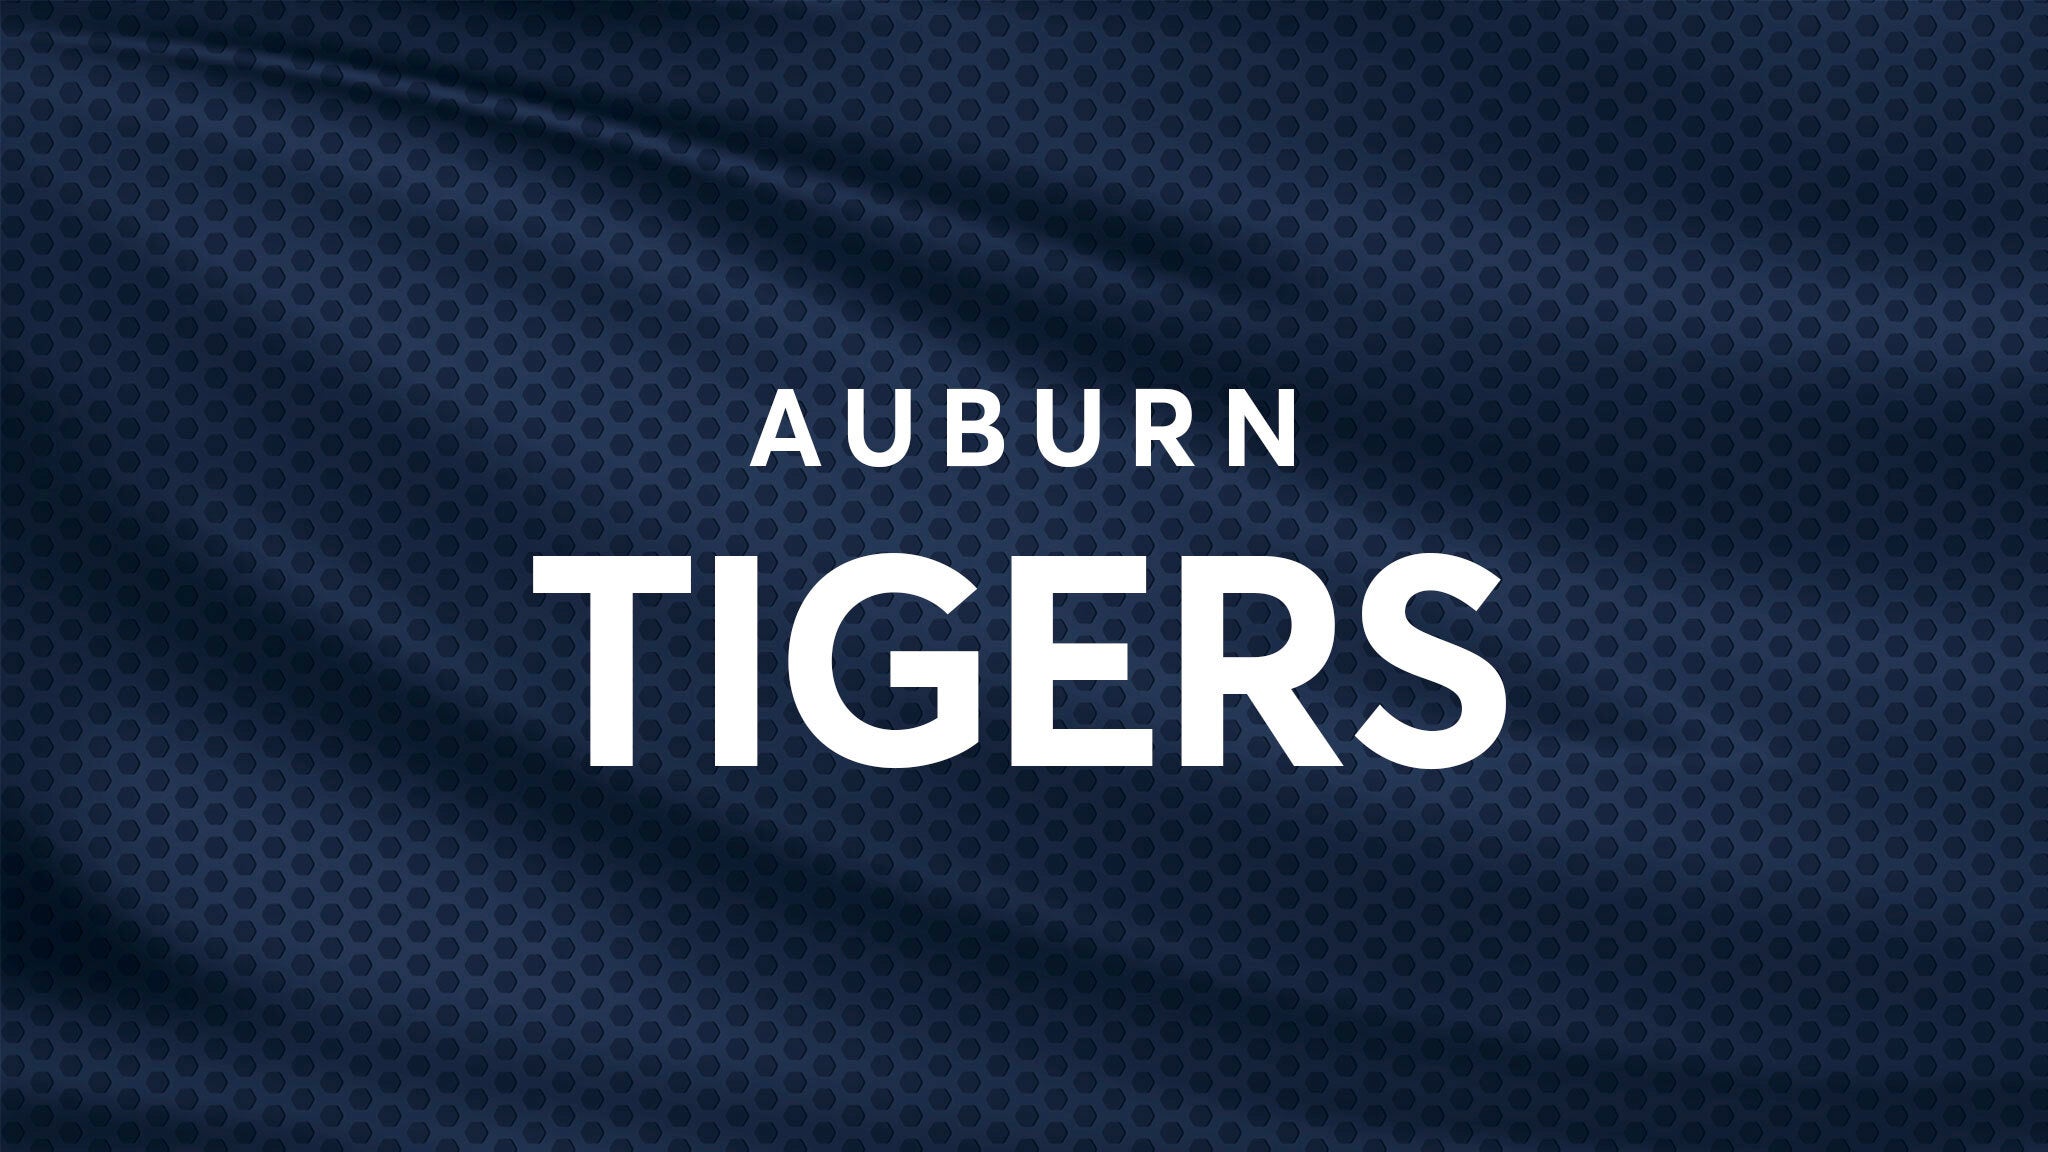 Auburn Tigers Football vs. Vanderbilt Commodores Football hero